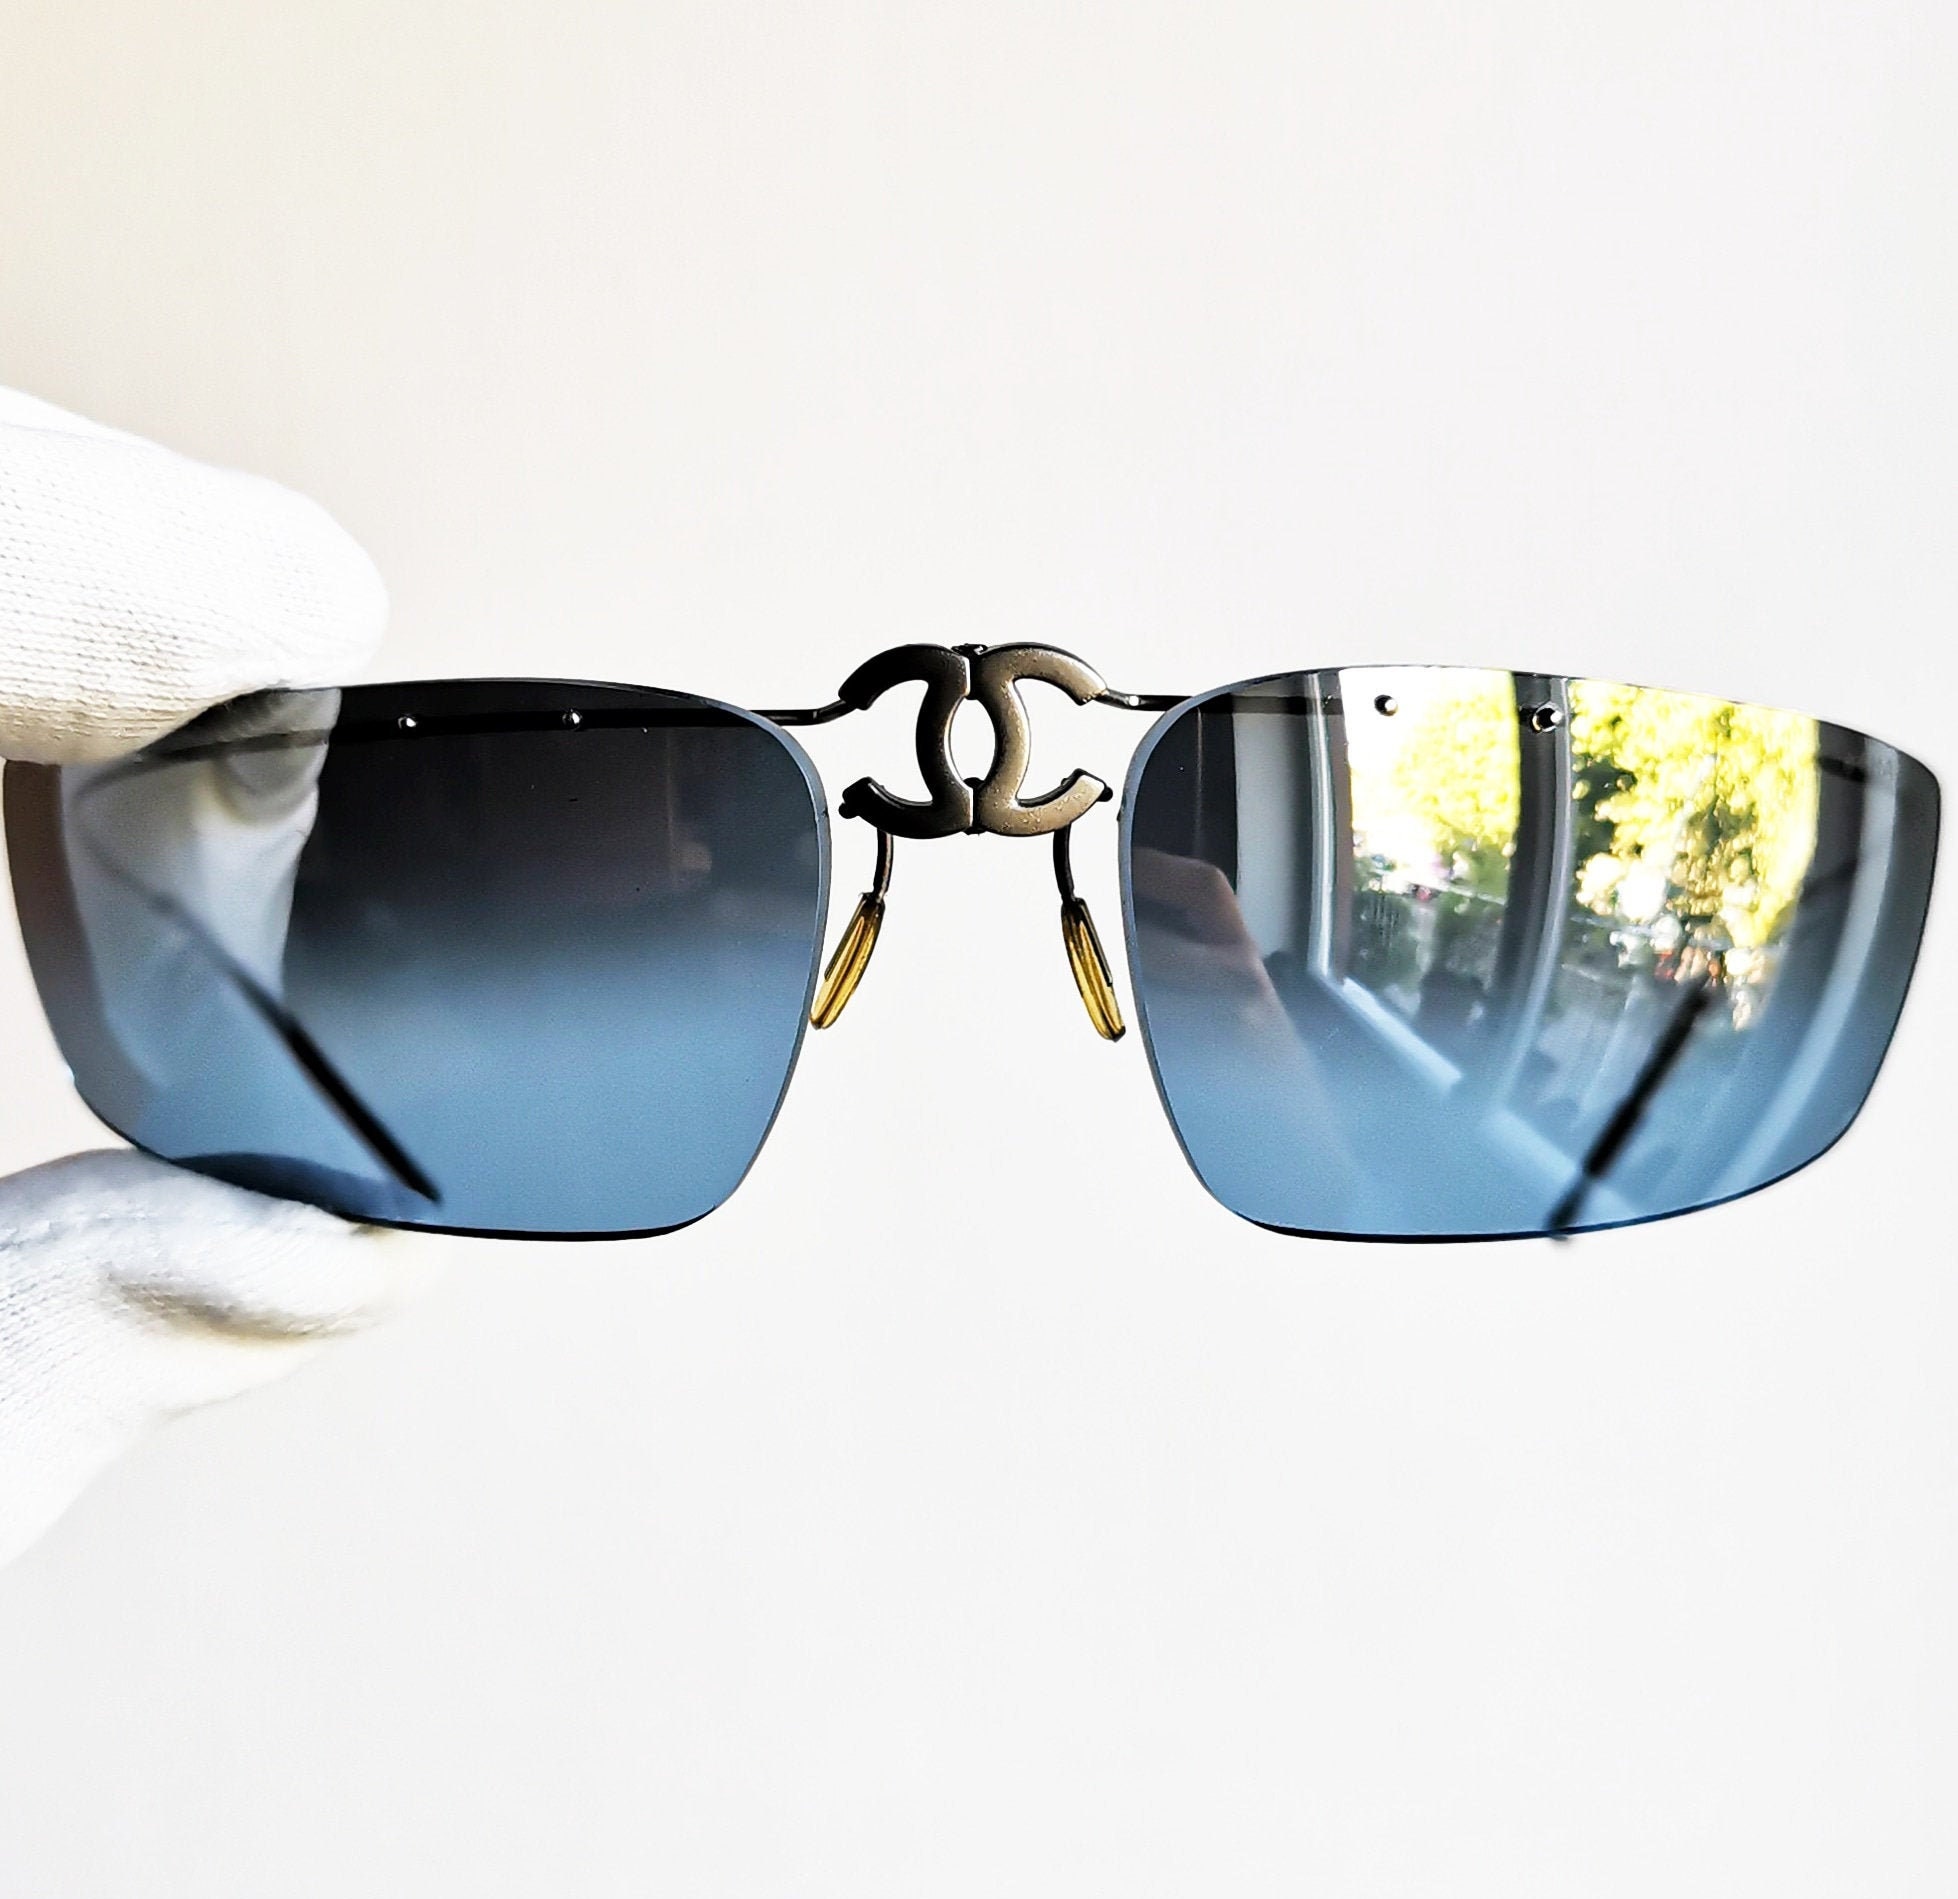 MISSONI Vintage Sunglasses Rare Diva Rockabilly Cateye Frame